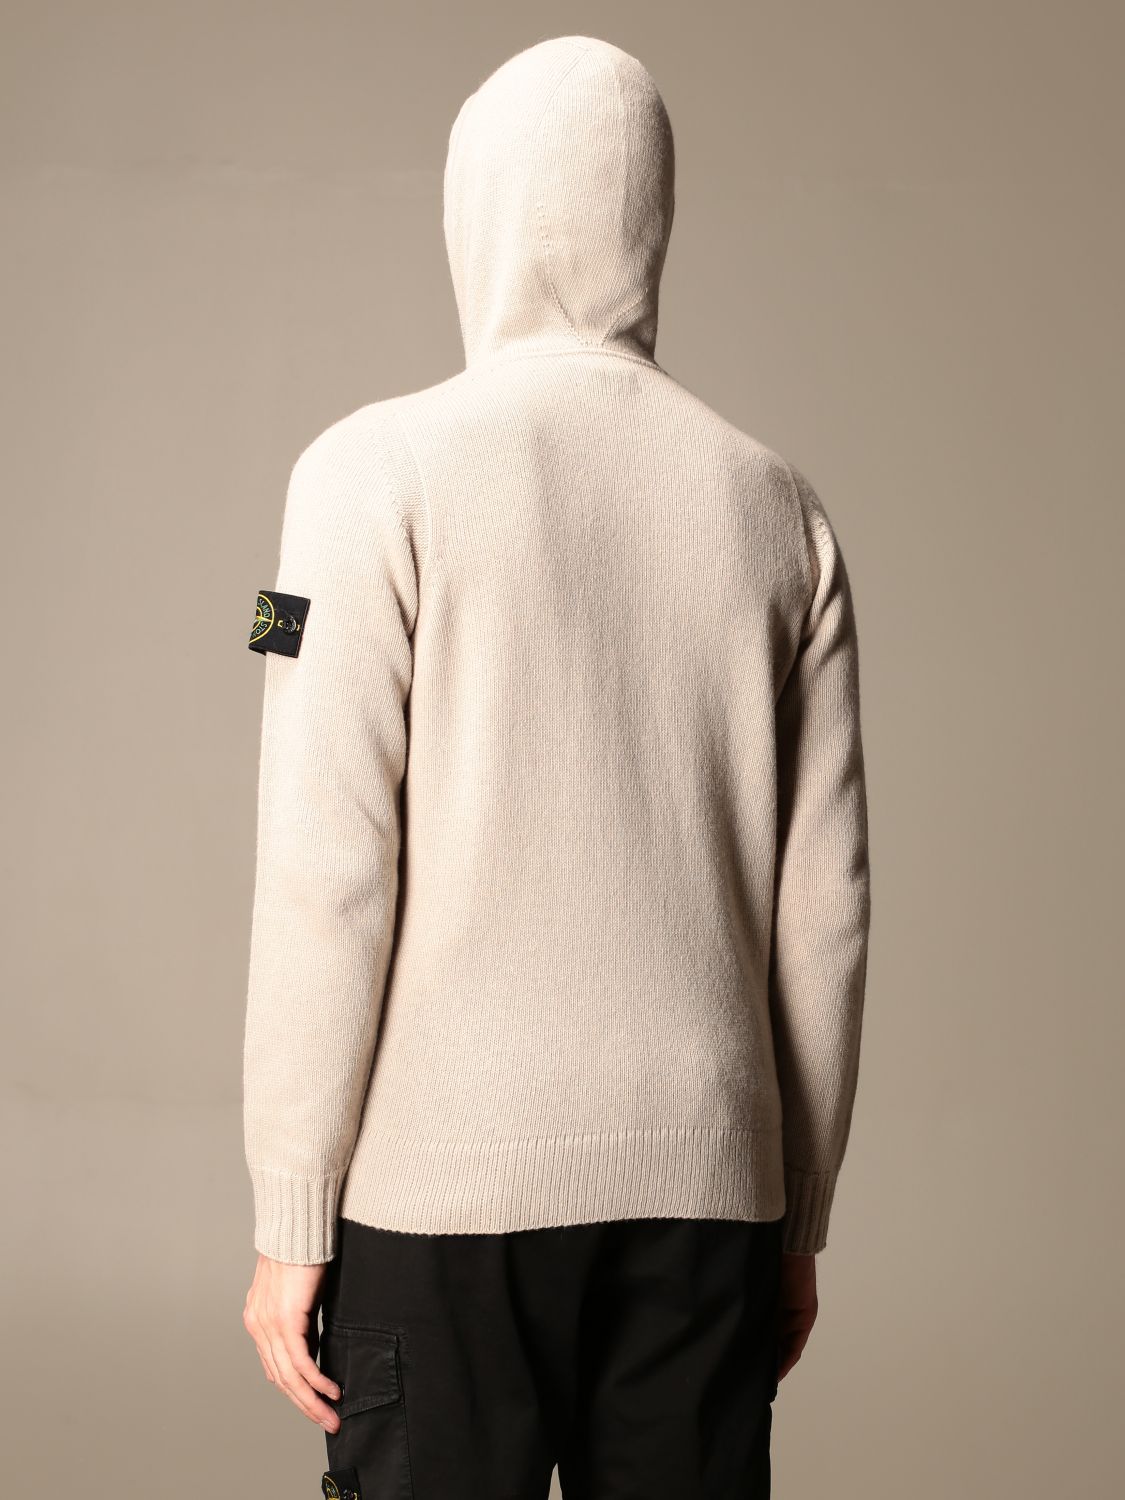 STONE ISLAND: Rocky sweatshirt in wool blend - Dove Grey | Sweatshirt ...